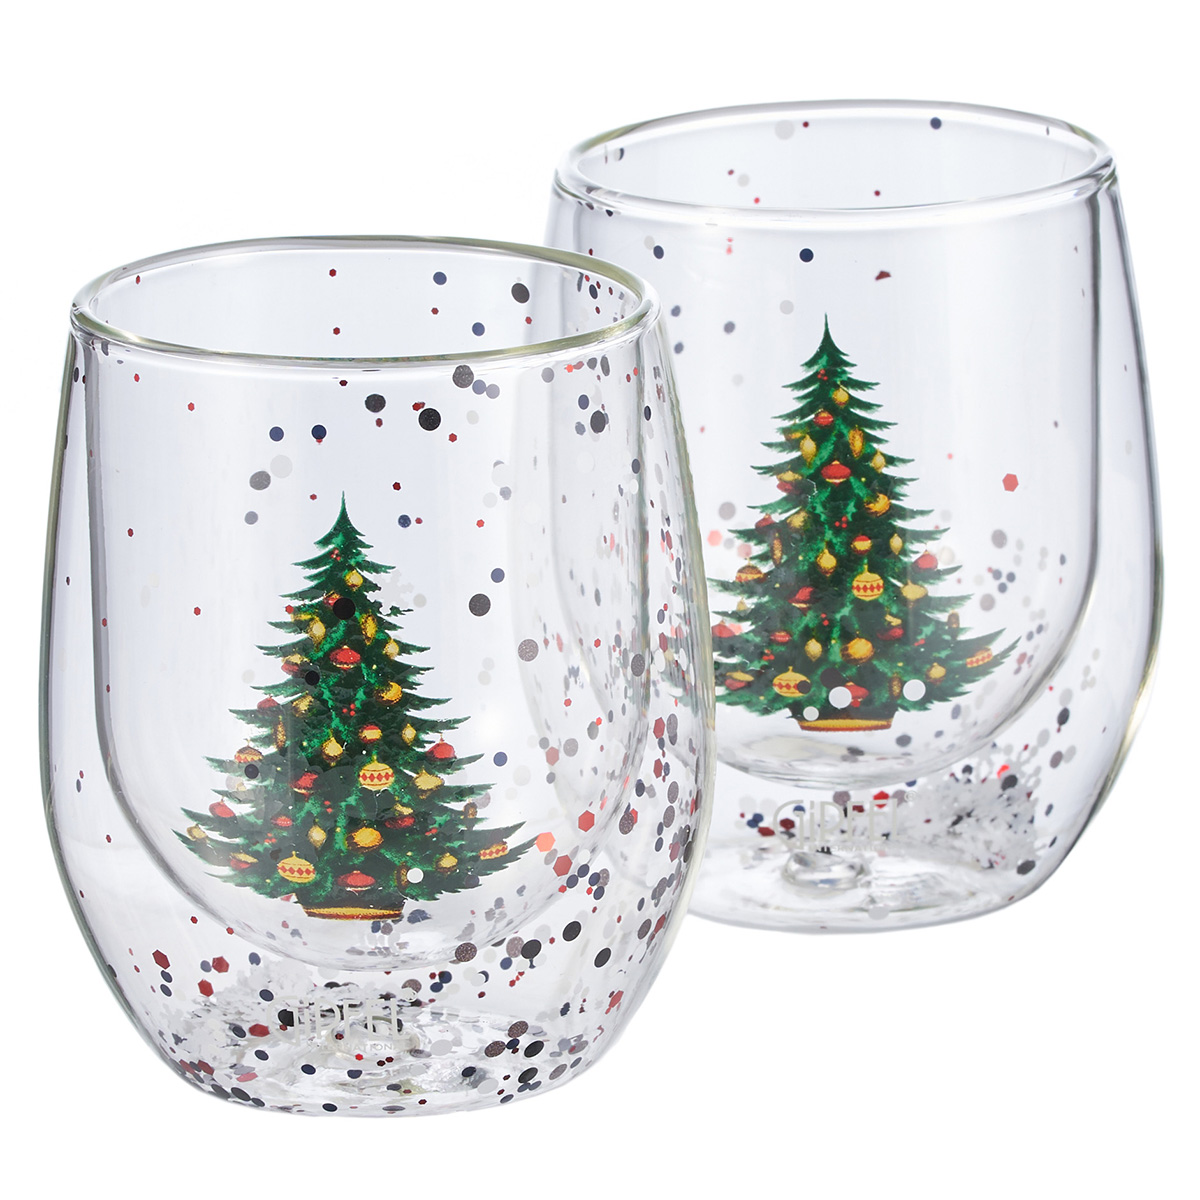 Набор стаканов Gipfel Christmas Star 52498 300 мл 2 предмета набор стаканов gipfel vinsanto 51528 2 предмета